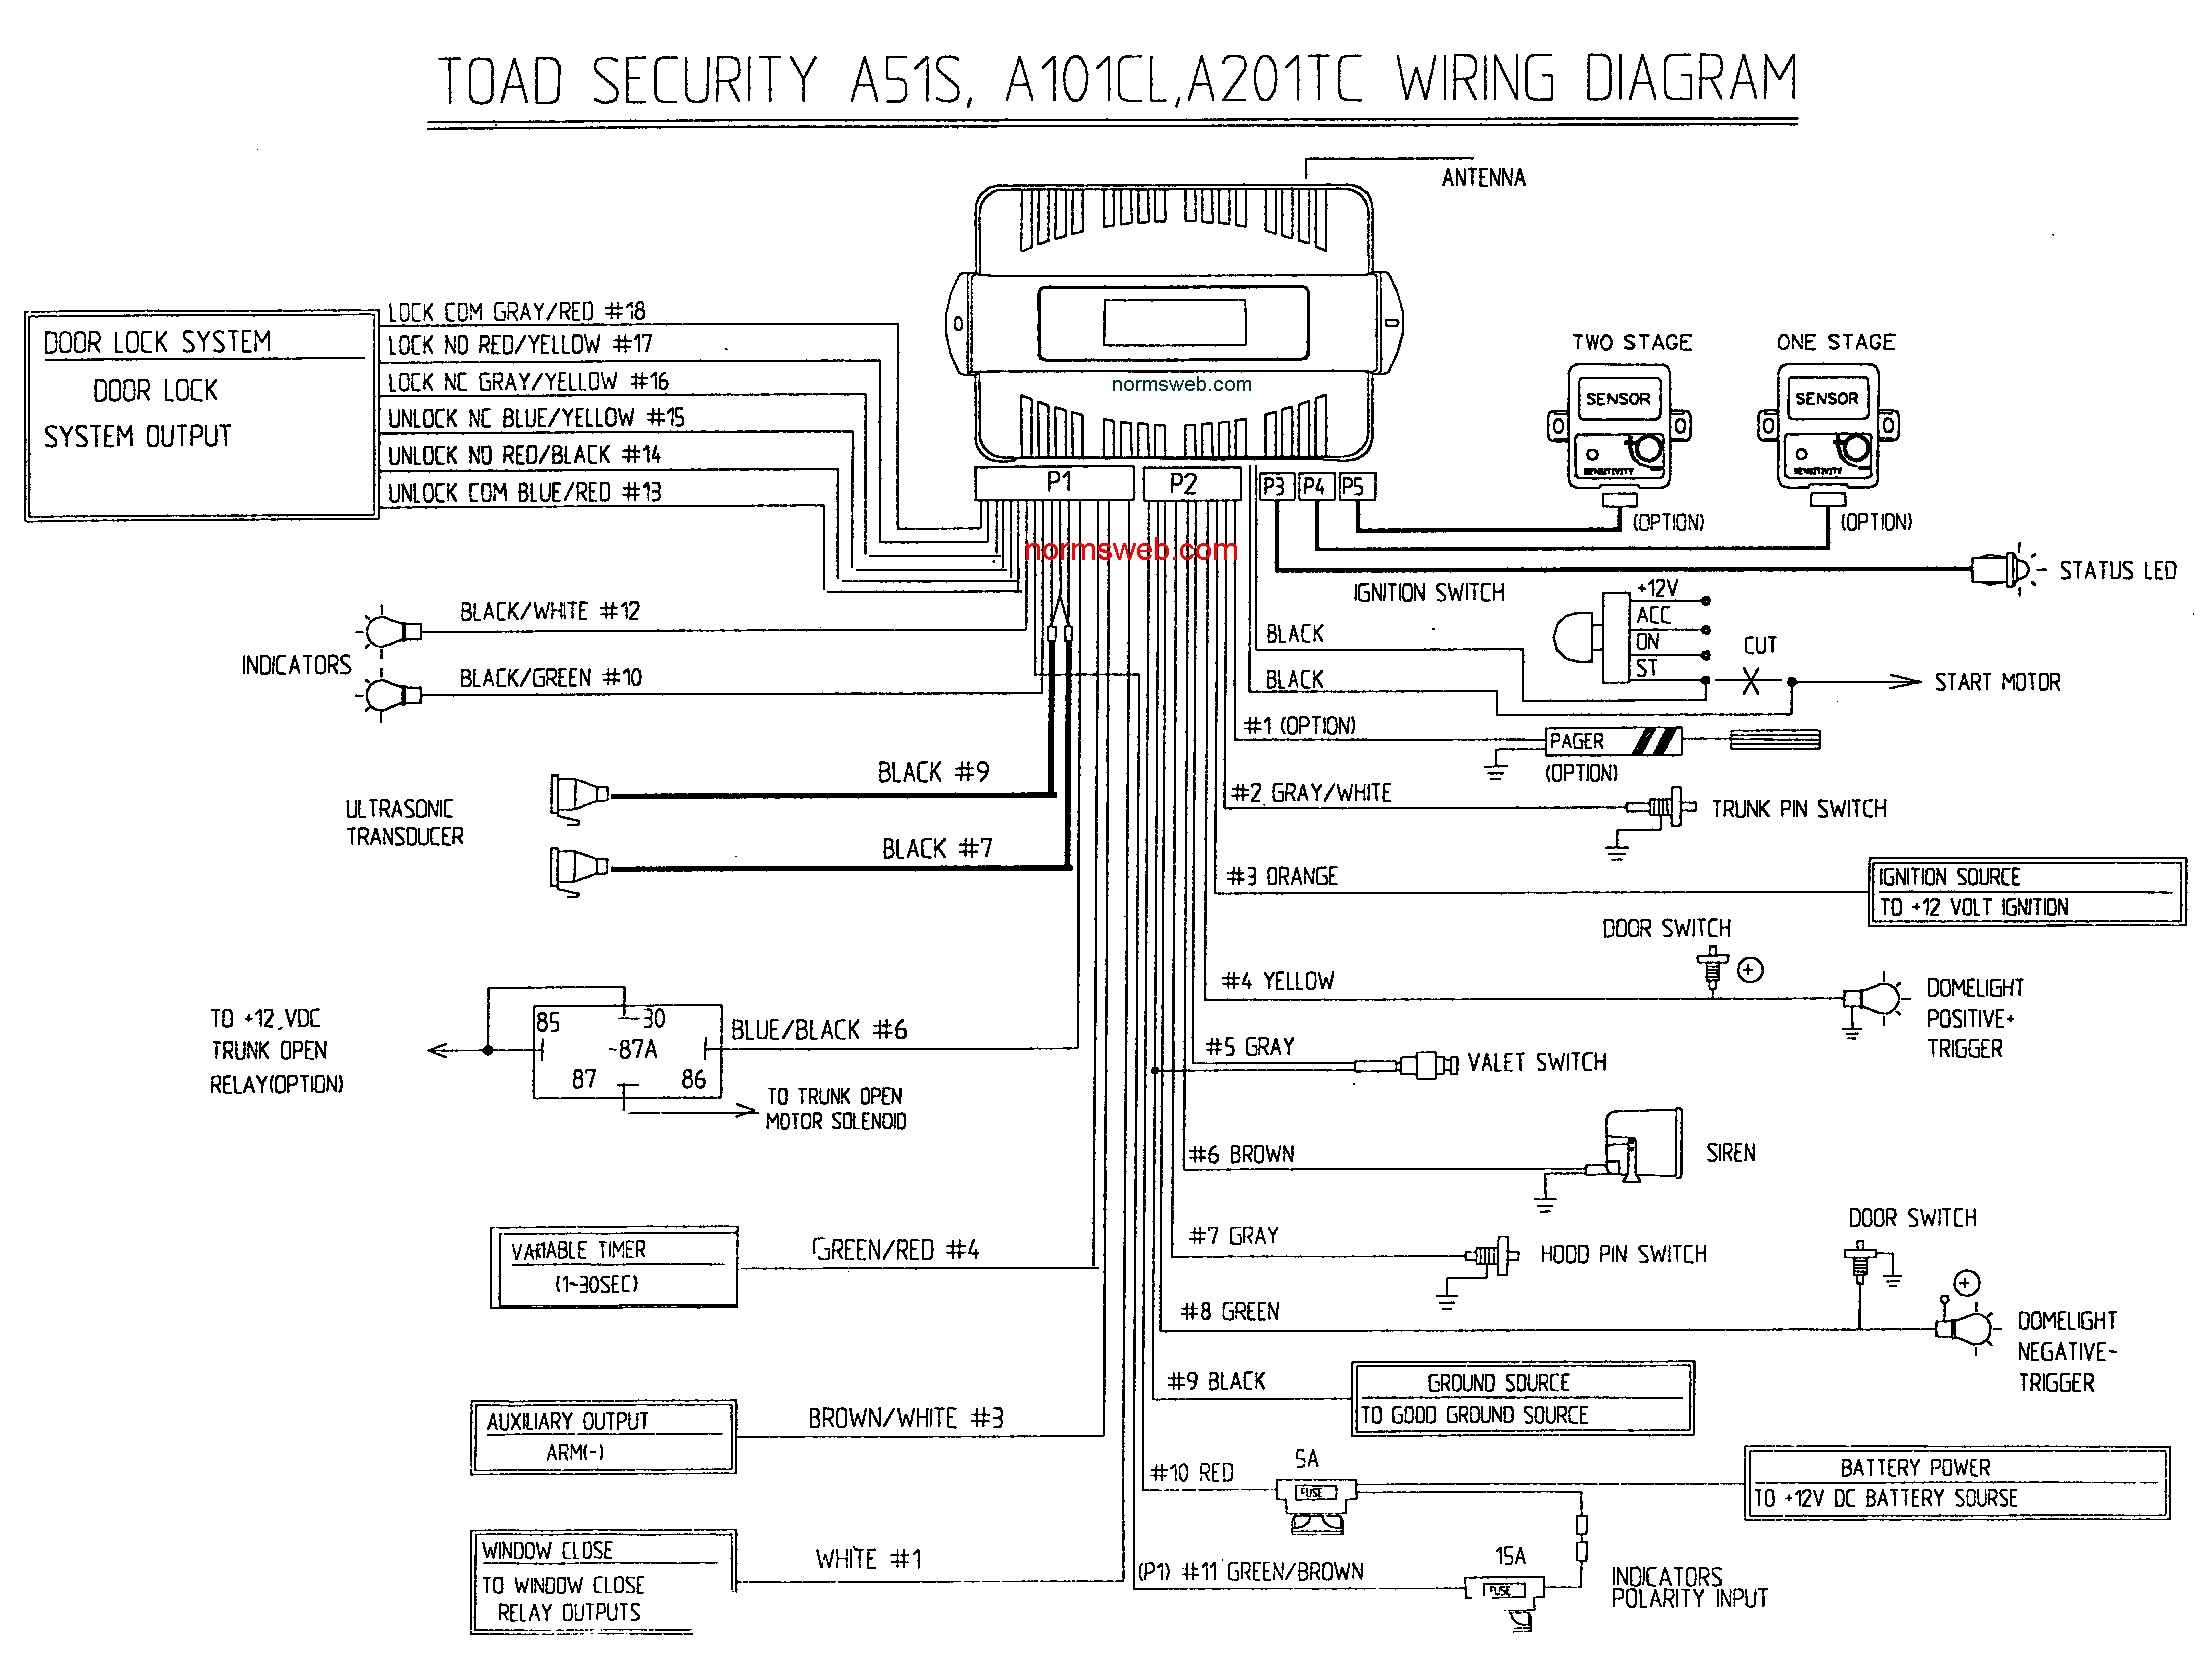 Keyless Entry System Wiring Diagram - camizu.org bulldog security keyless entry system wiring diagram 